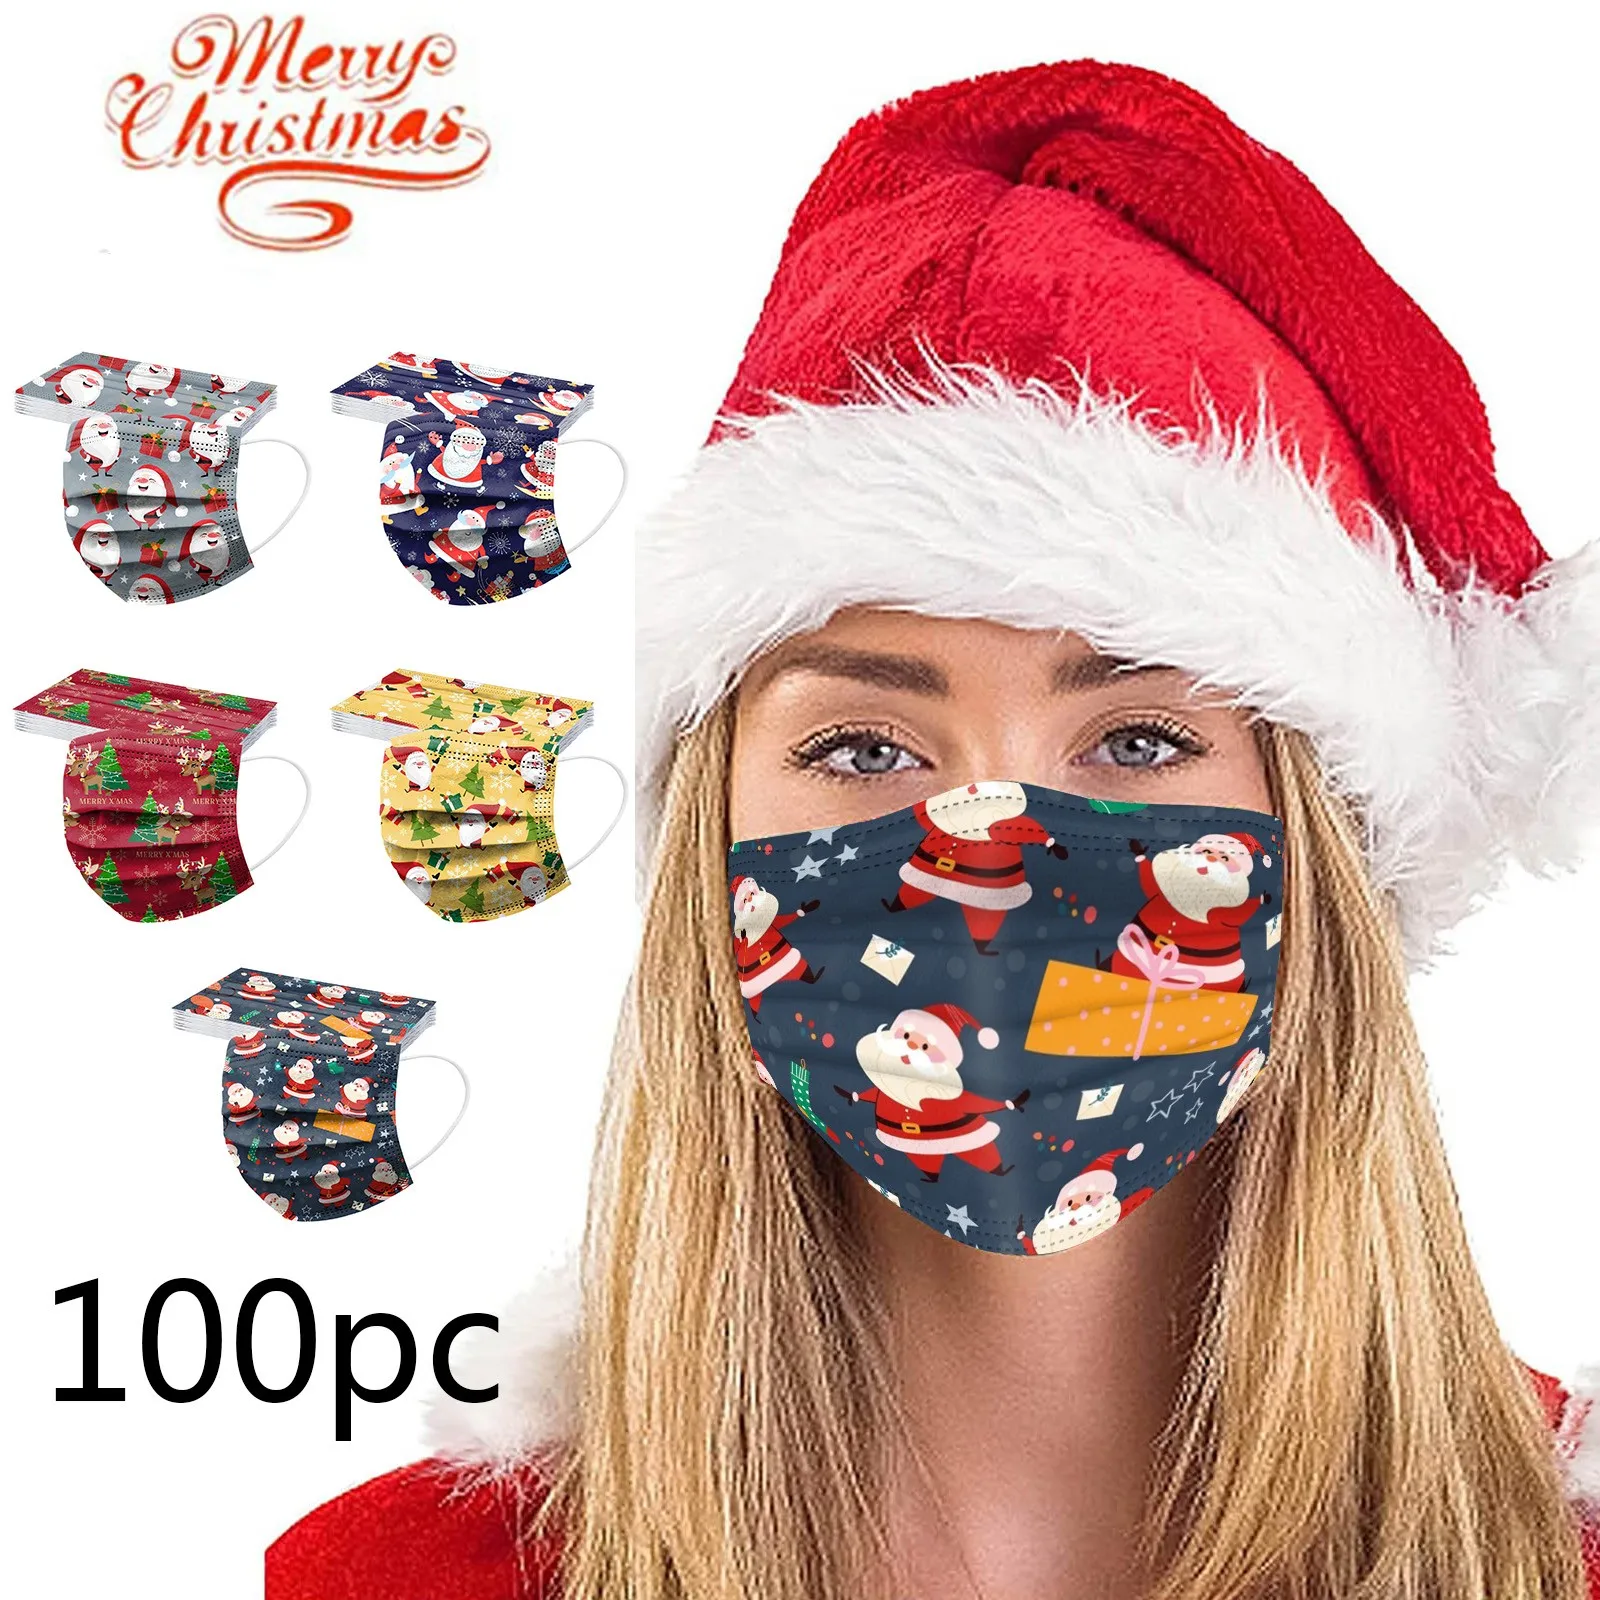 

100pcs Christmas Mask for face Men Cartoons Xmas Disposable 3-ply Protective Masks Halloween Cosplay Маска mascara descartavel